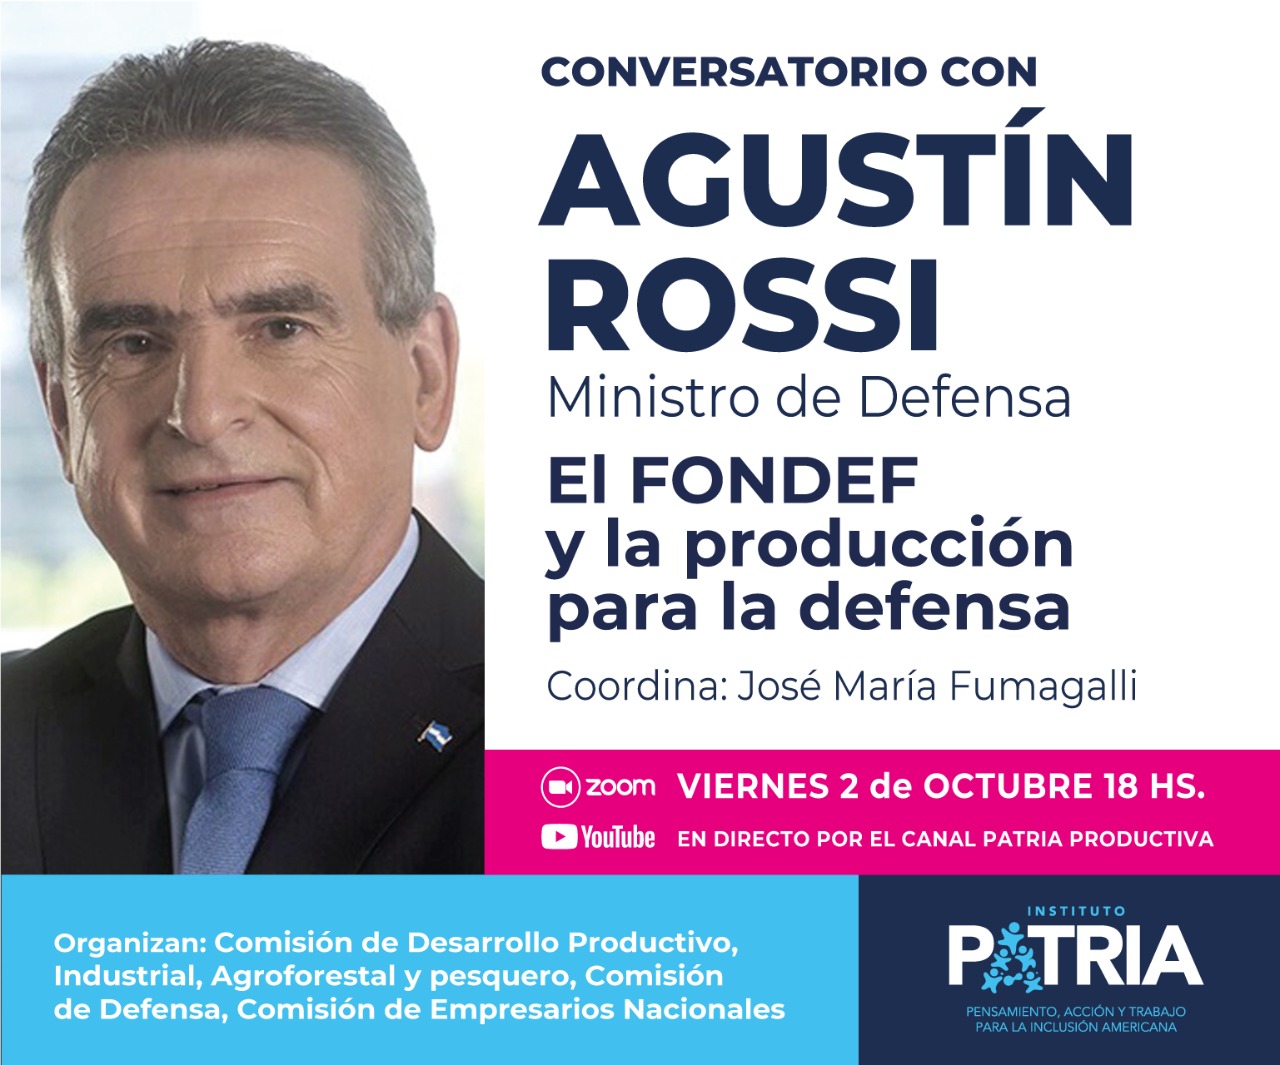 Conversatorio con Agustín Rossi